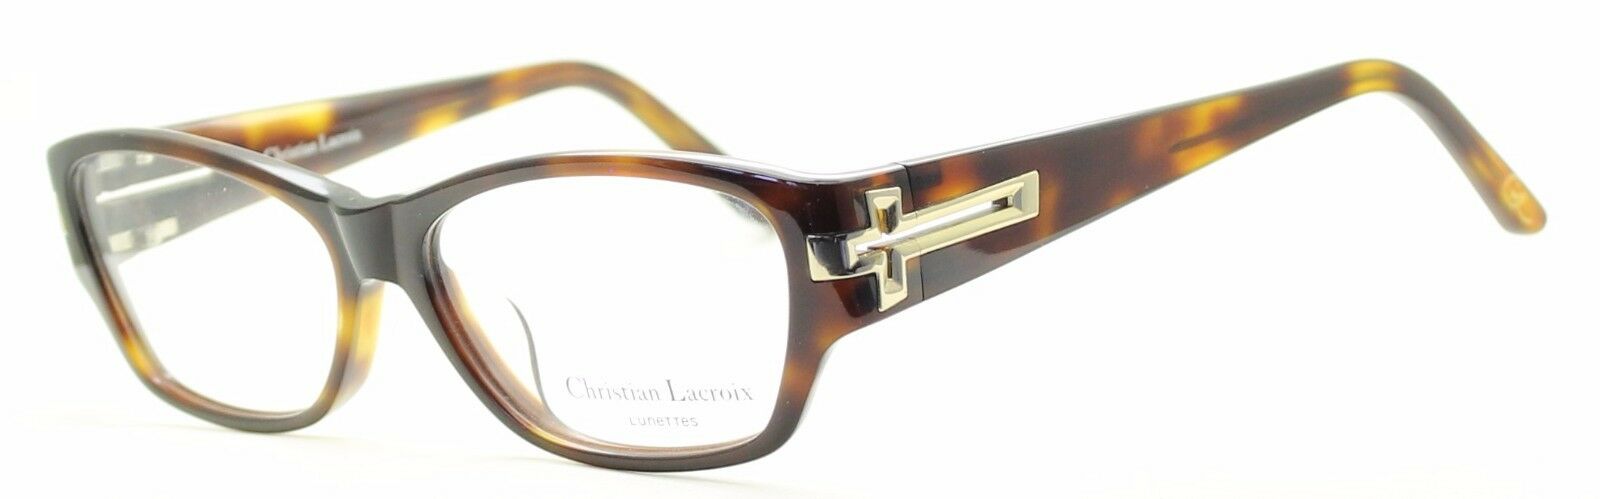 CHRISTIAN LACROIX CL1017 165 Eyewear RX Optical FRAMES Eyeglasses Glasses -  BNIB - GGV Eyewear